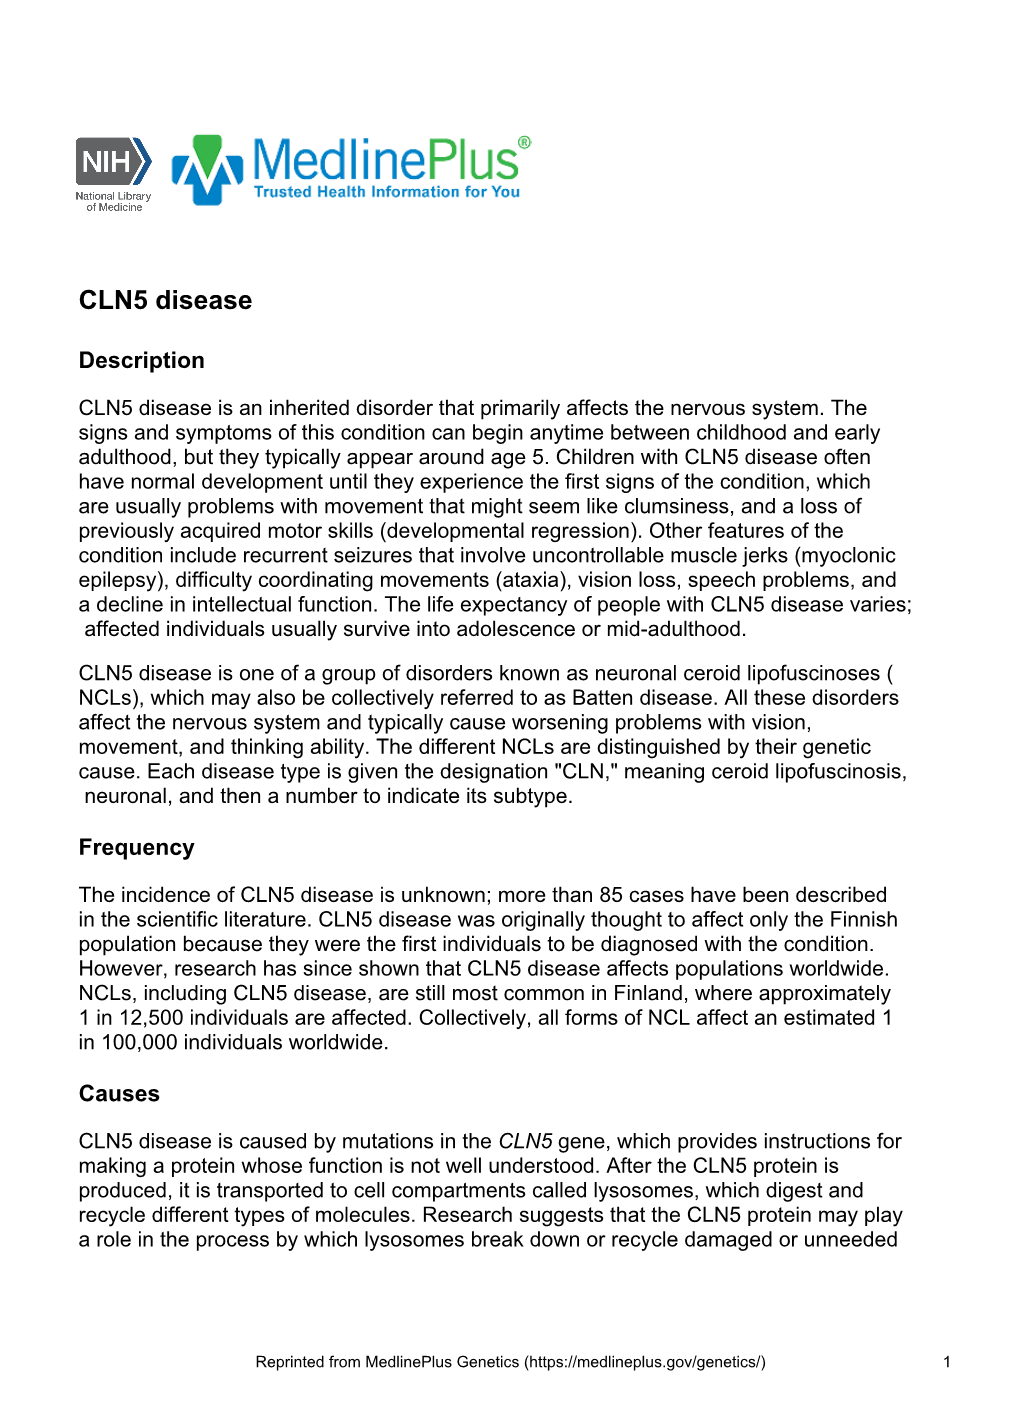 CLN5 Disease